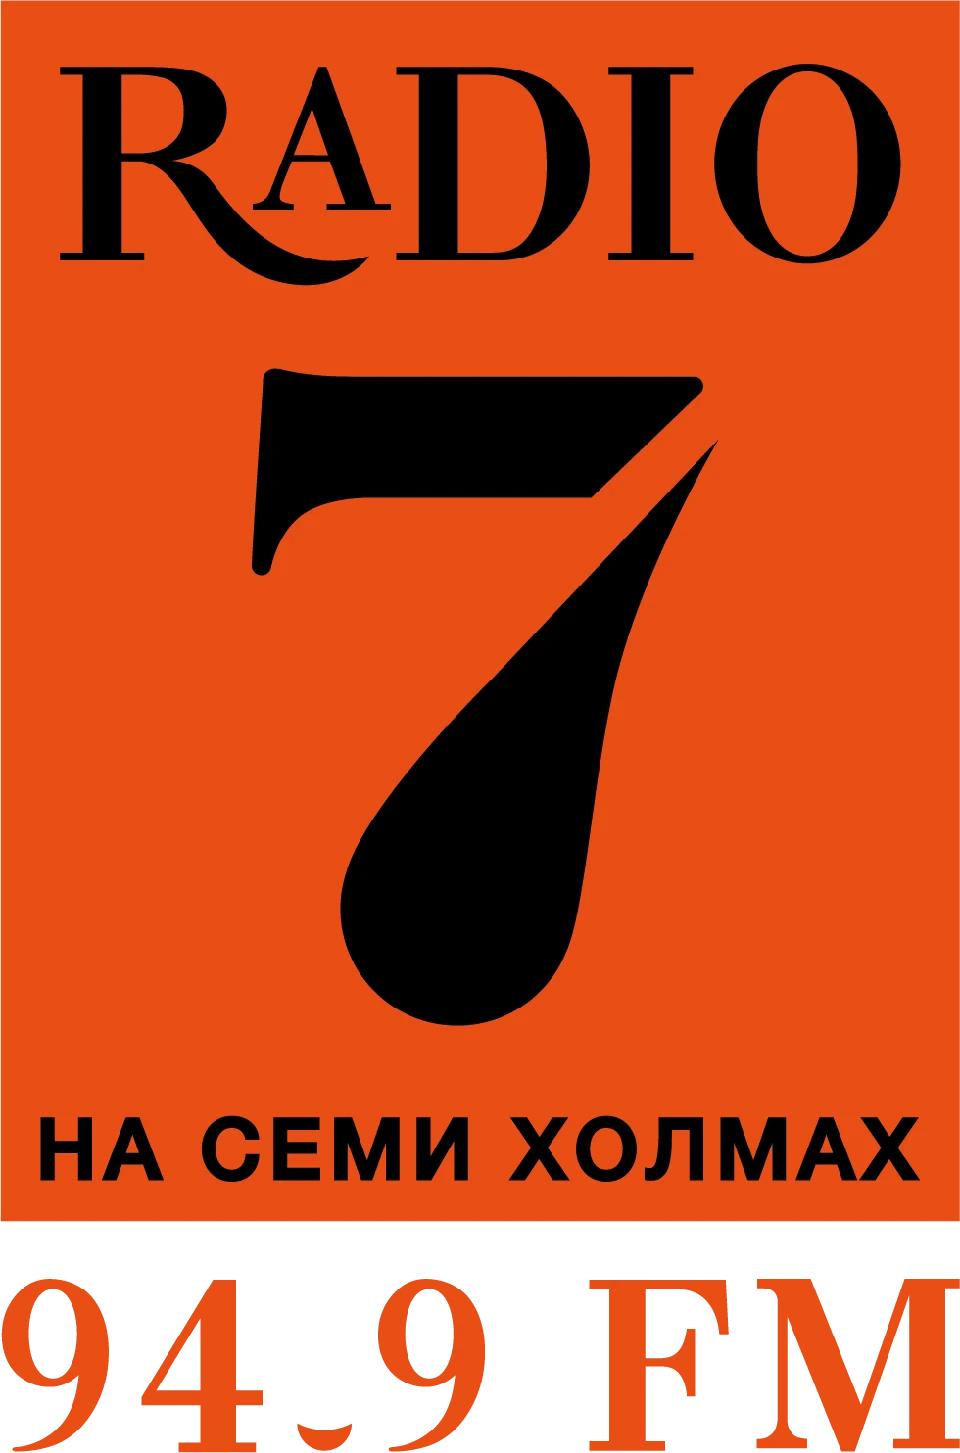 Радио 7. Радио 7 логотип. Радио 7 на семи холмах. Логотип радиостанции на 7 холмах. Радио семь сайт